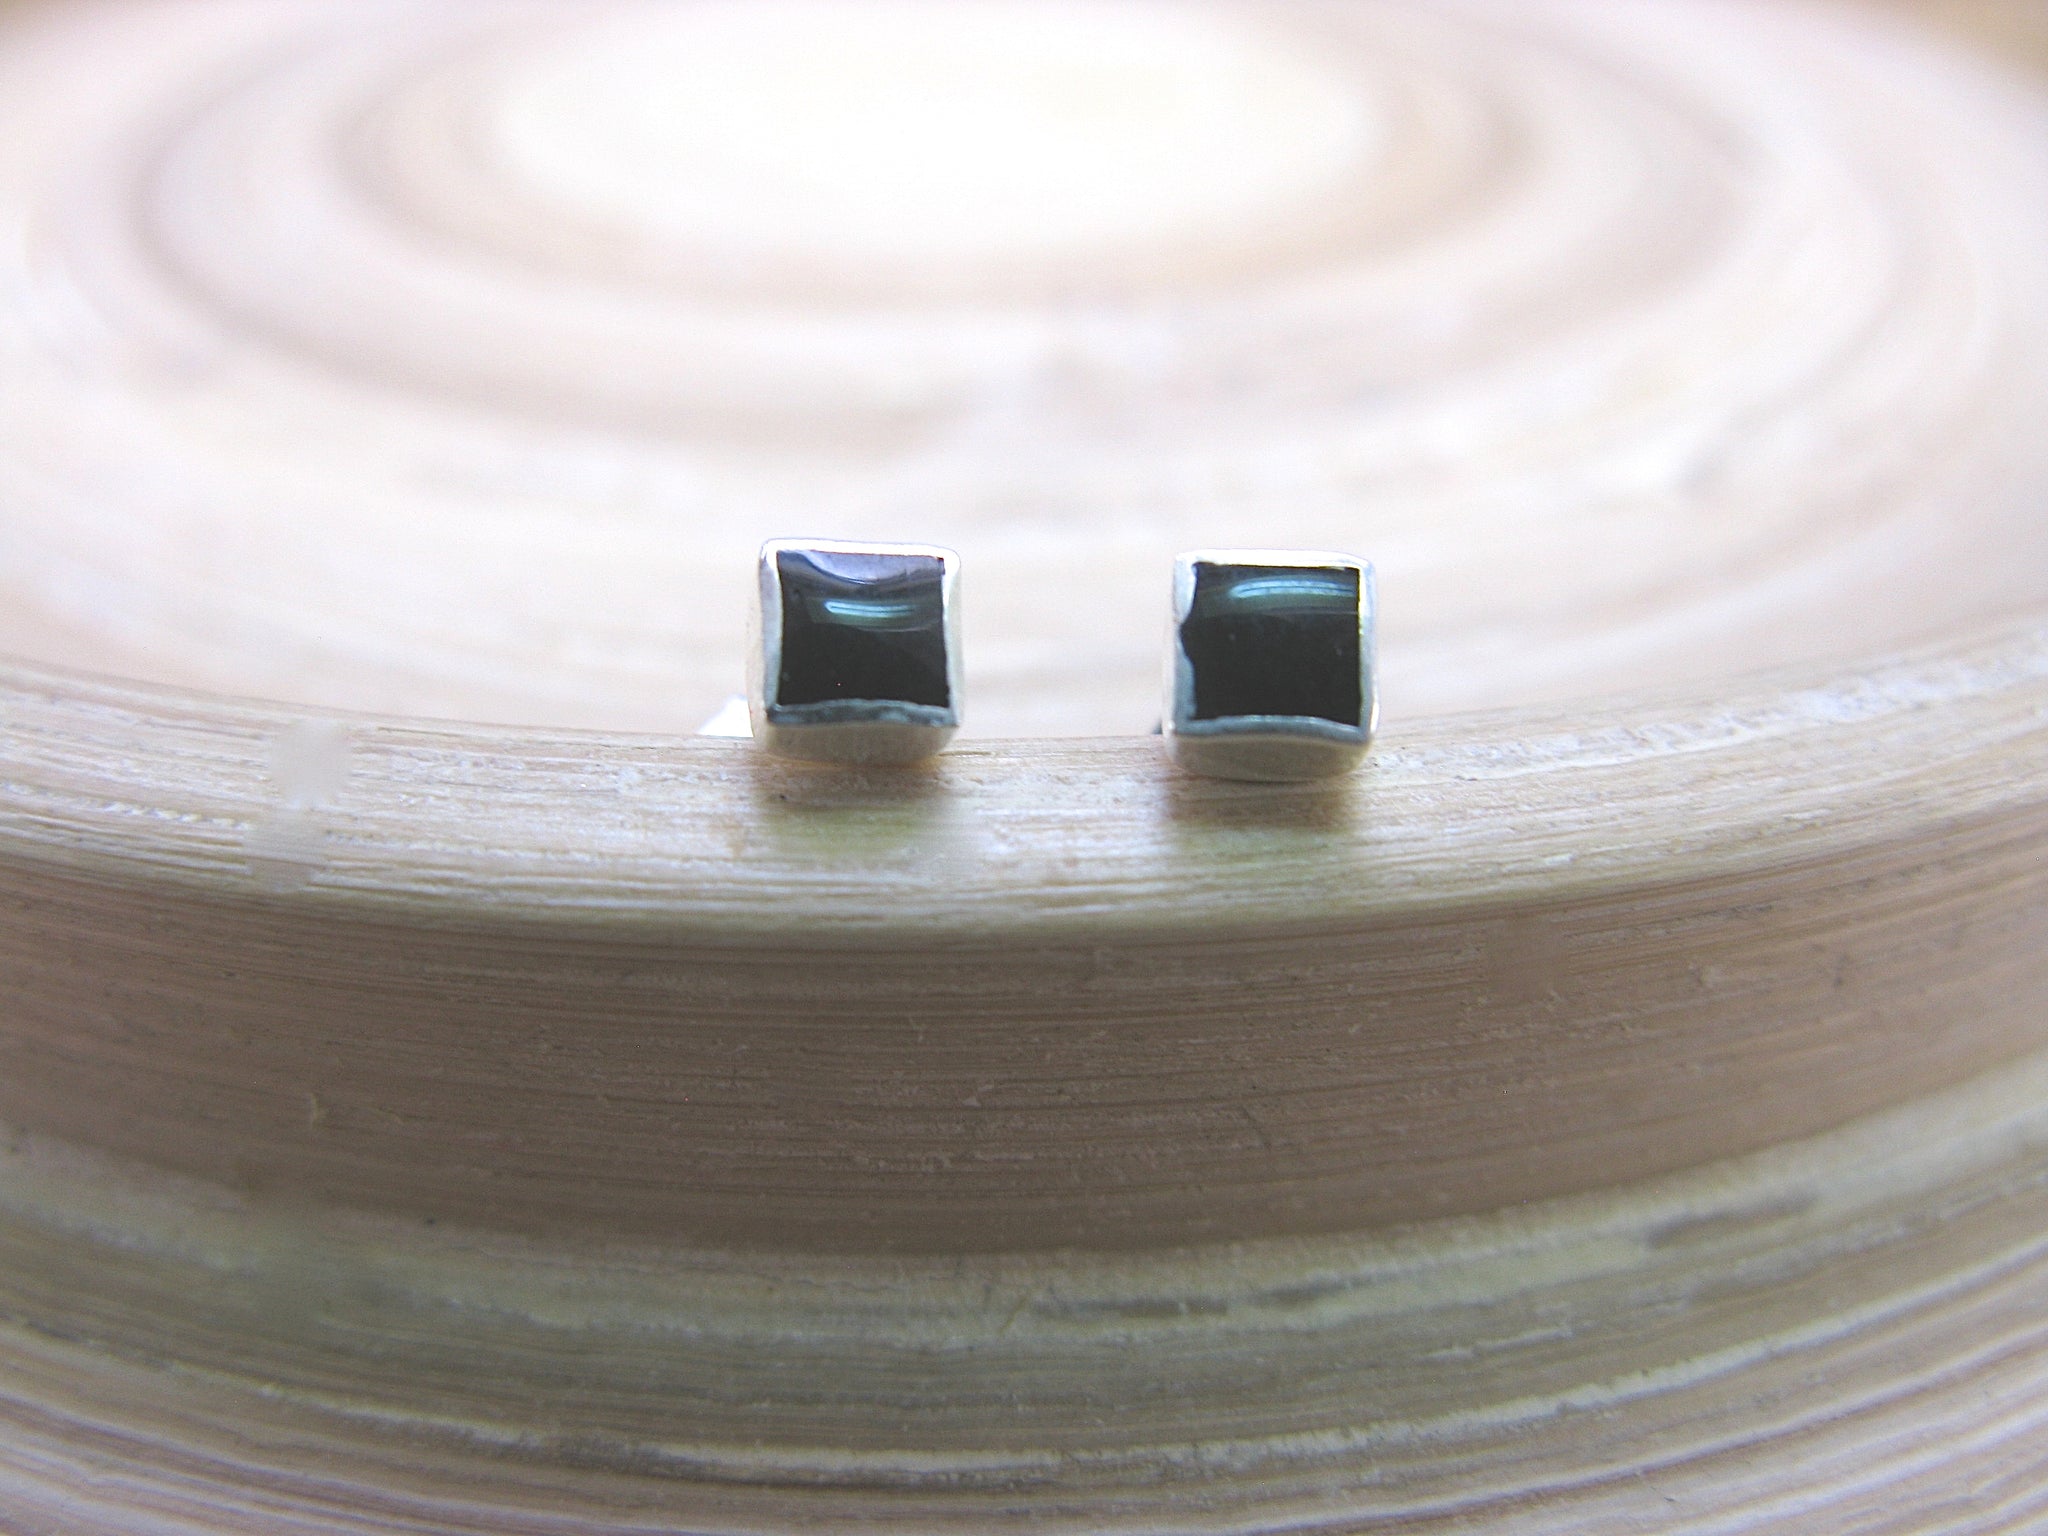 Square Onyx 4mm Minimalist Stud Earrings in 925 Sterling Silver